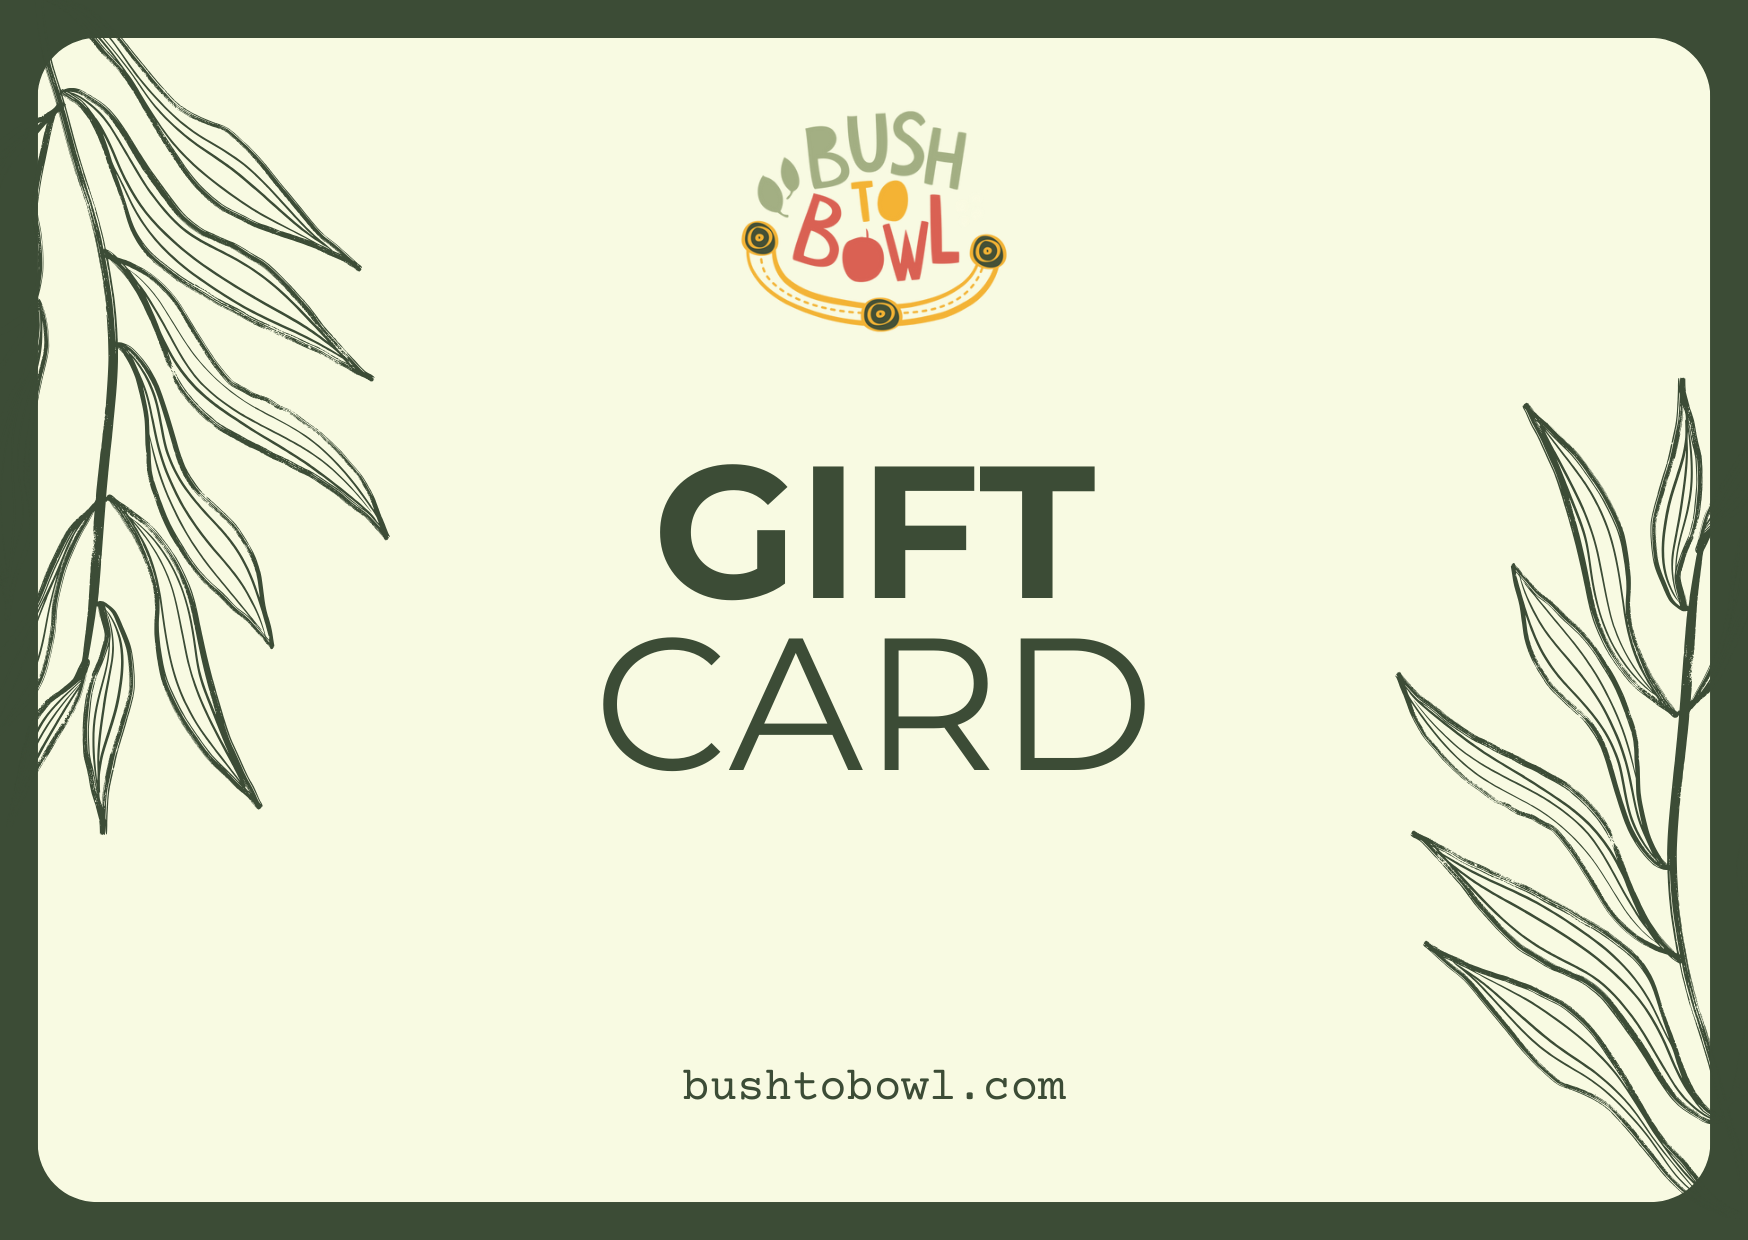 Bush to Bowl Gift Card